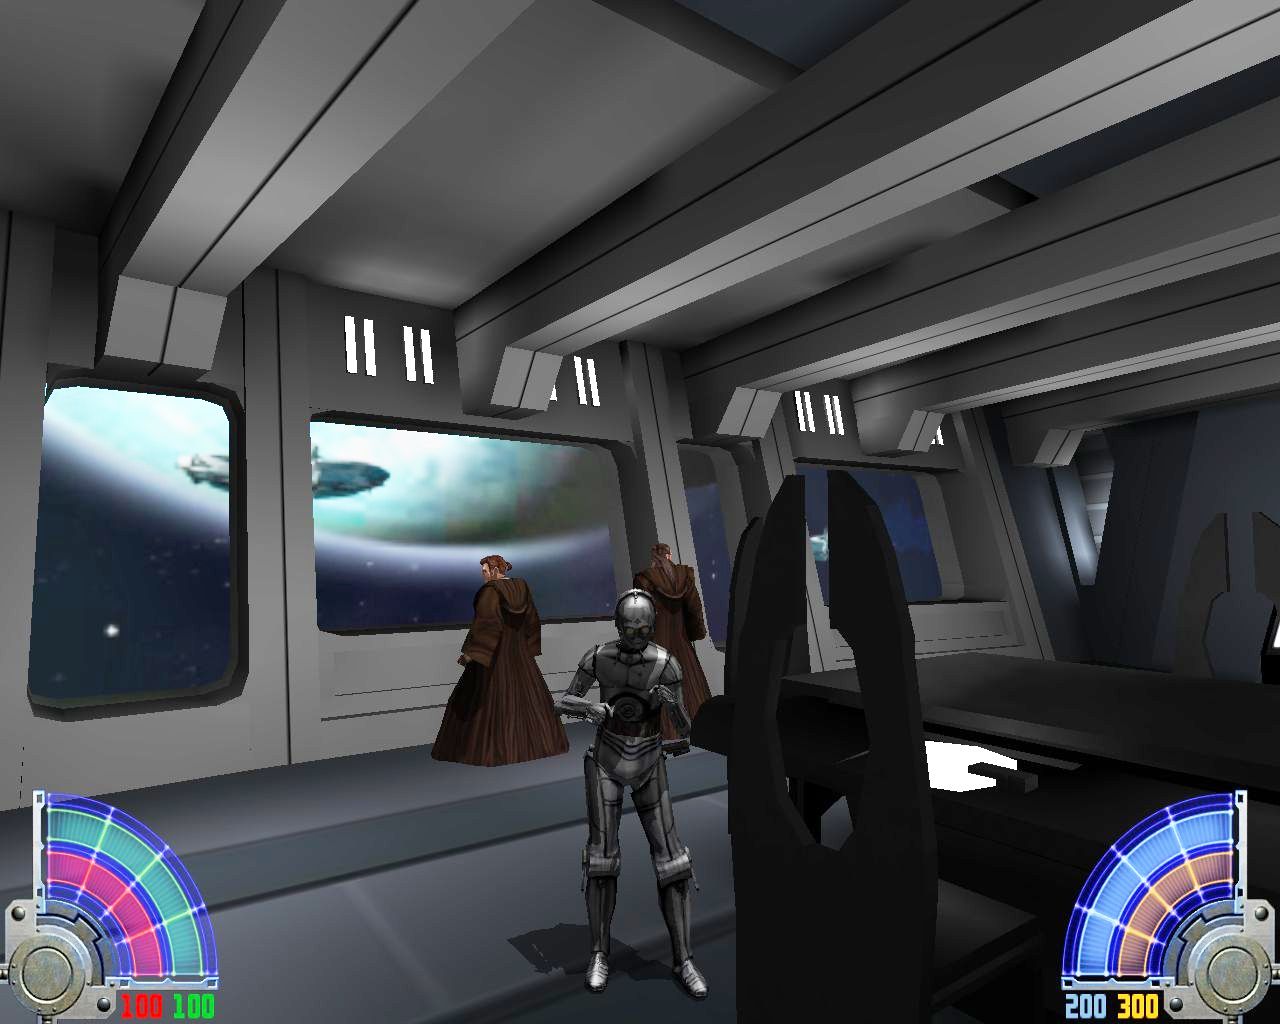 Qui Gon Jinn and Obi-wan Kenobi at the window of the droid control ship